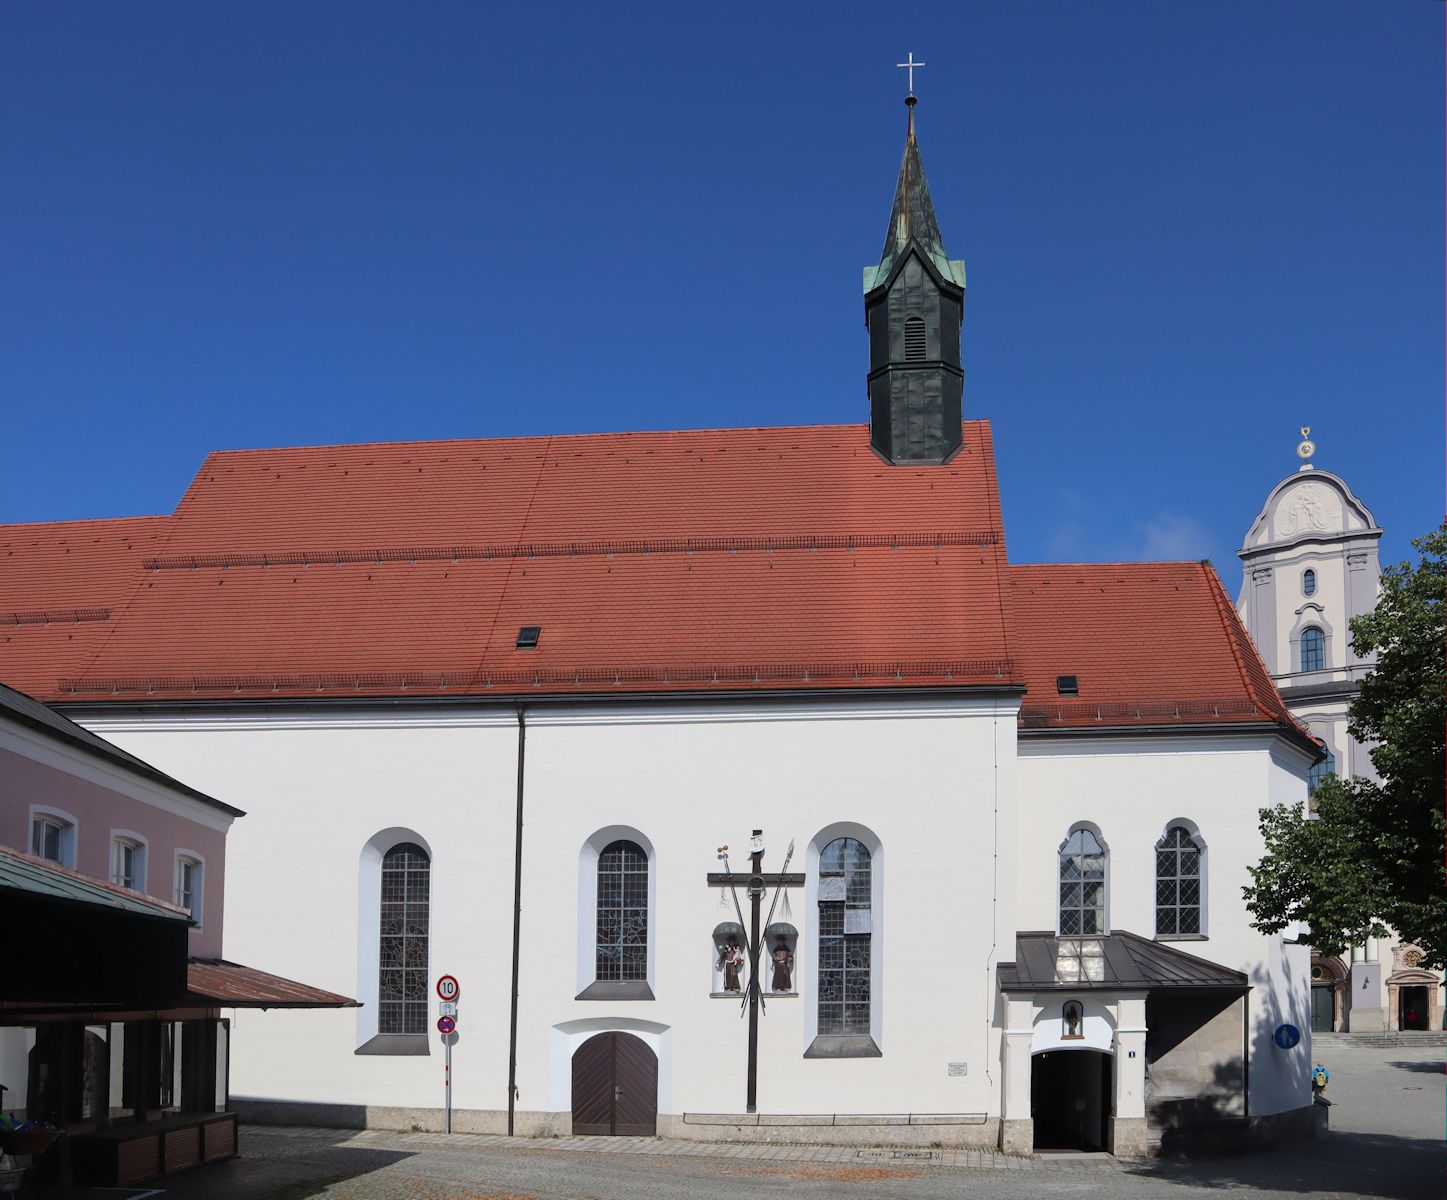 Kloster St. Konrad in Altötting, dahinter die Basilika St. Anna